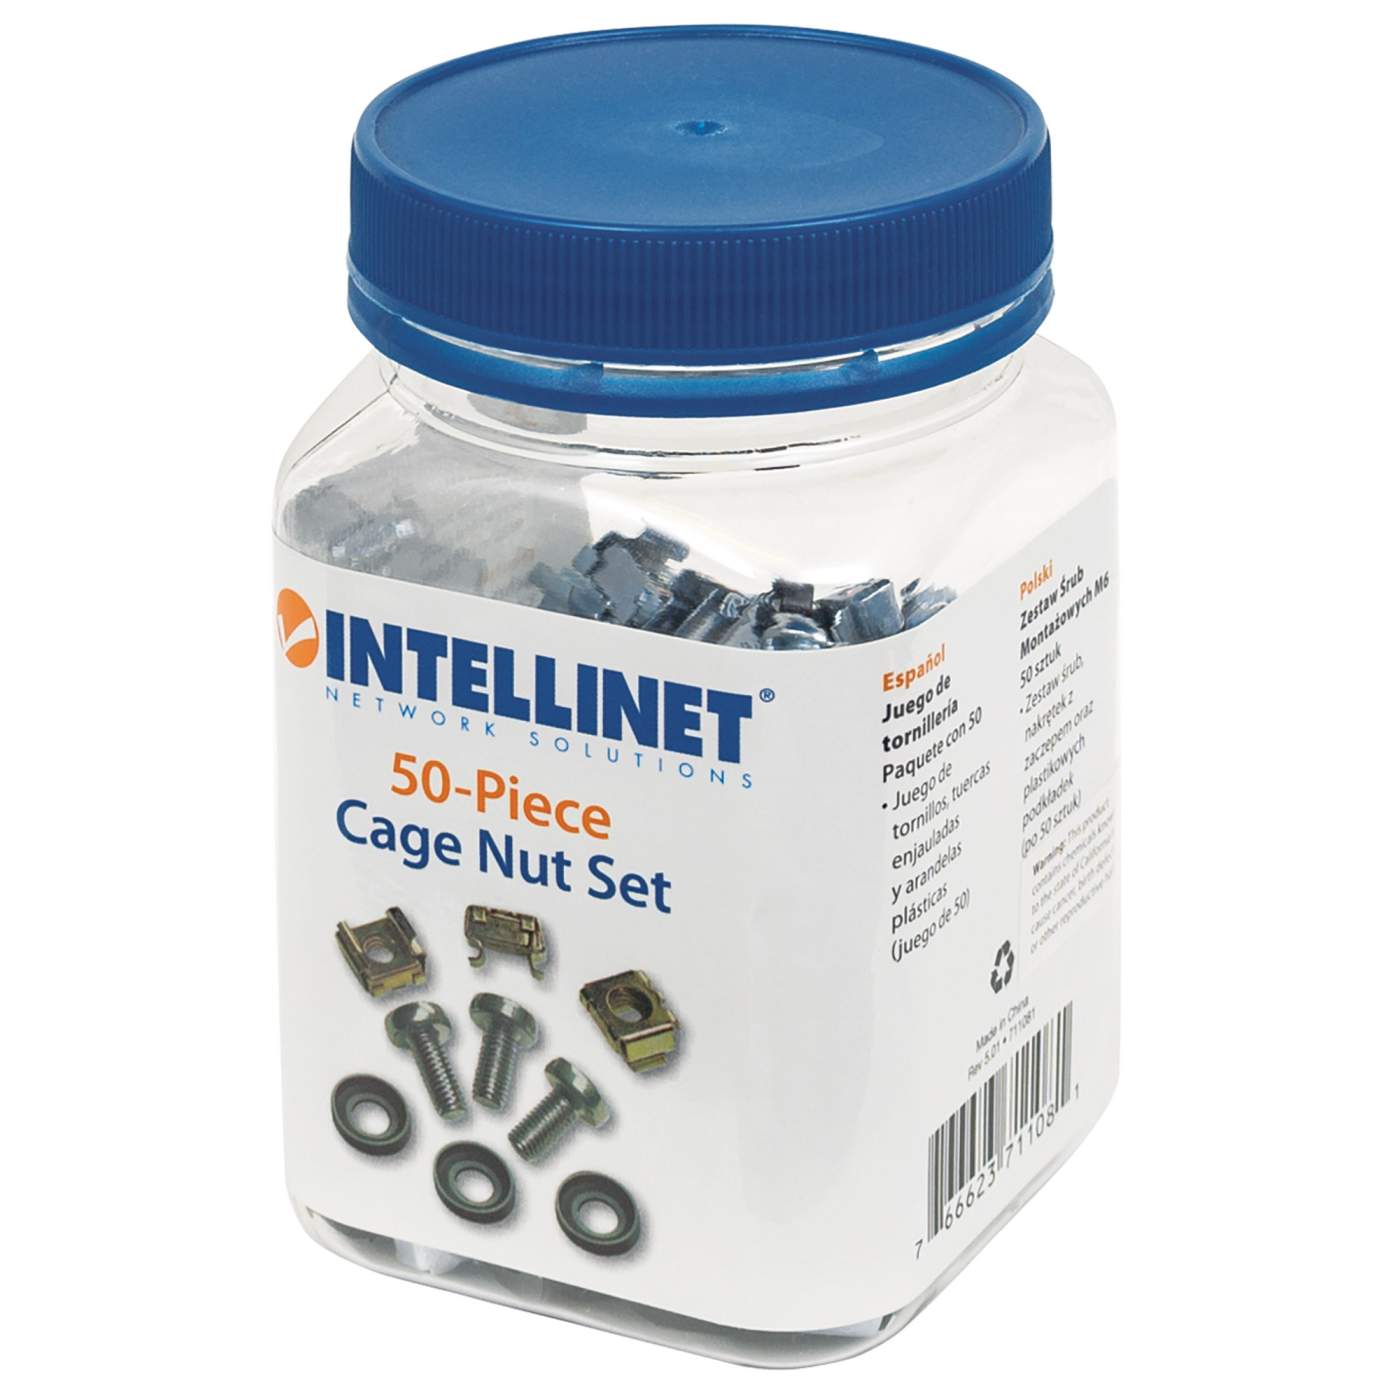 Cage Nut Set Packaging Image 2